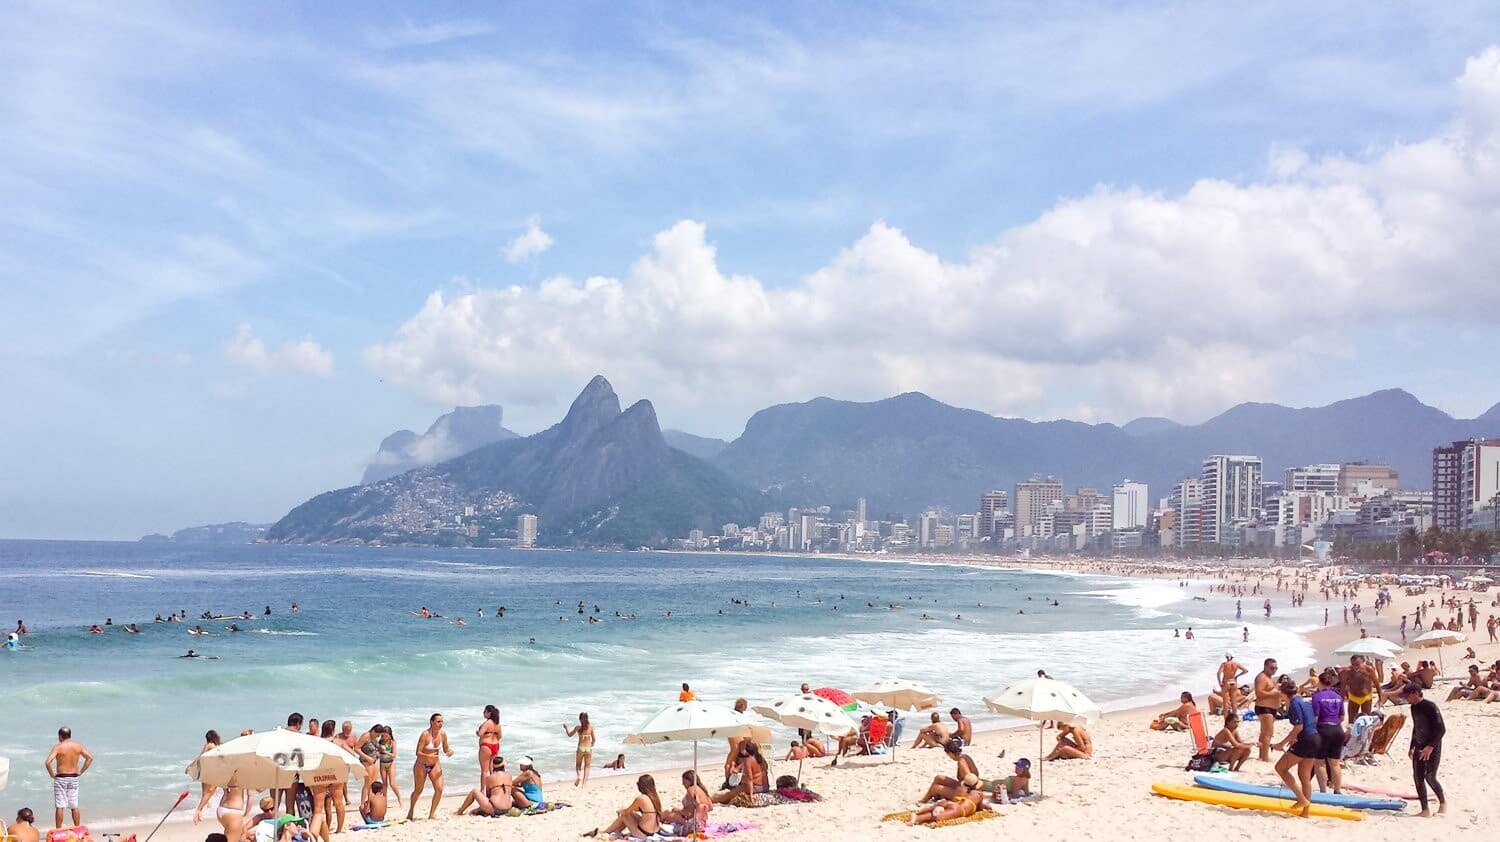 Rio's beach culture: A world of sun and fun